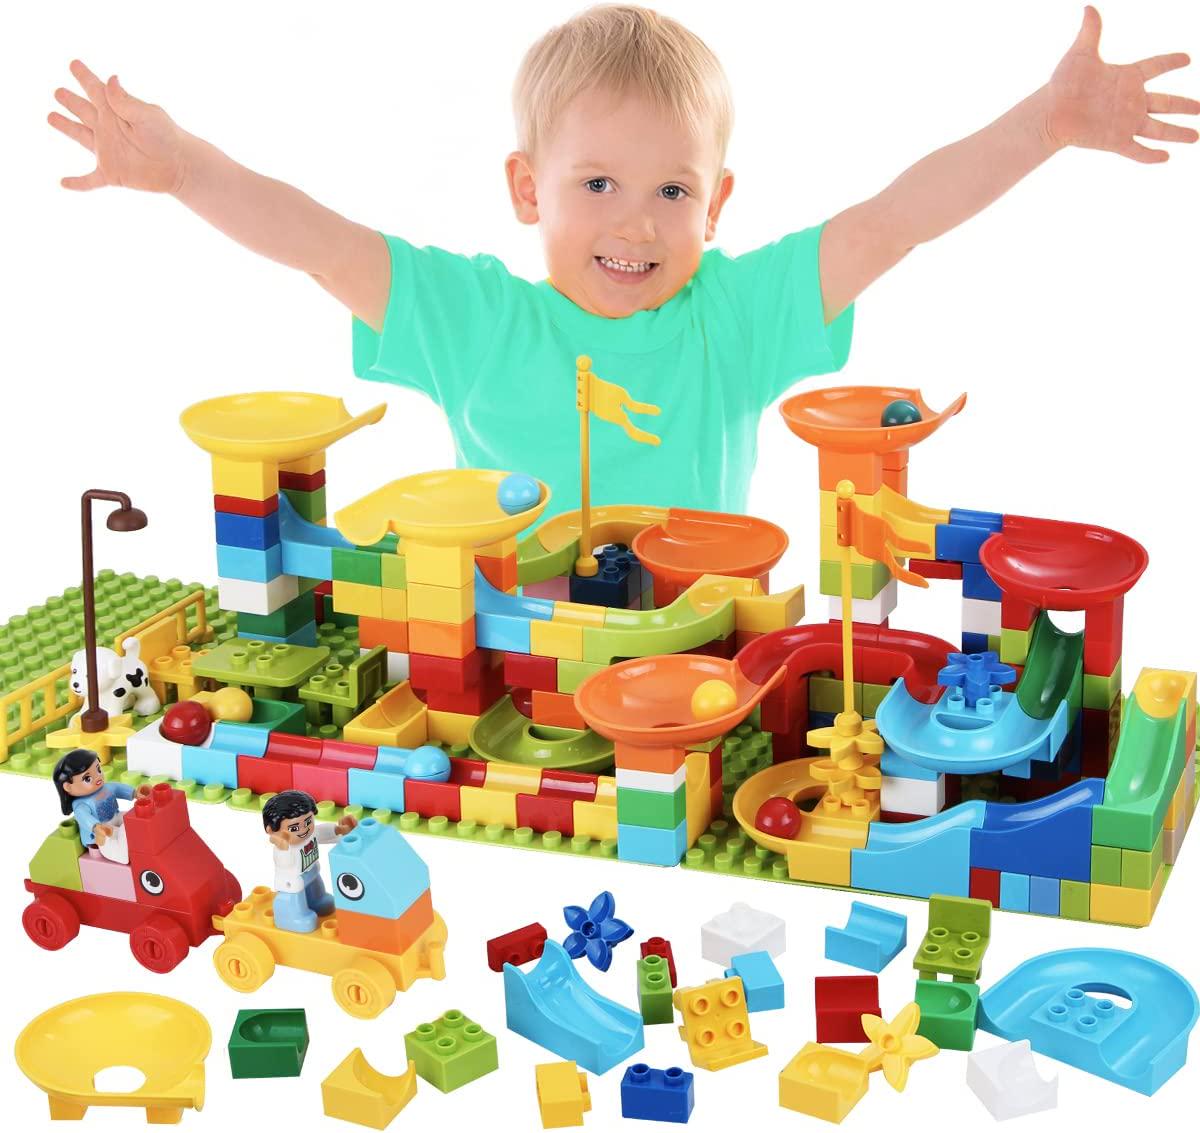 MIMAX, Mimax Marble Run, Marble Runs Toy for Kids, DIY Building Blocks Marble Runs Fun Educational Toys Gift (292PCS)